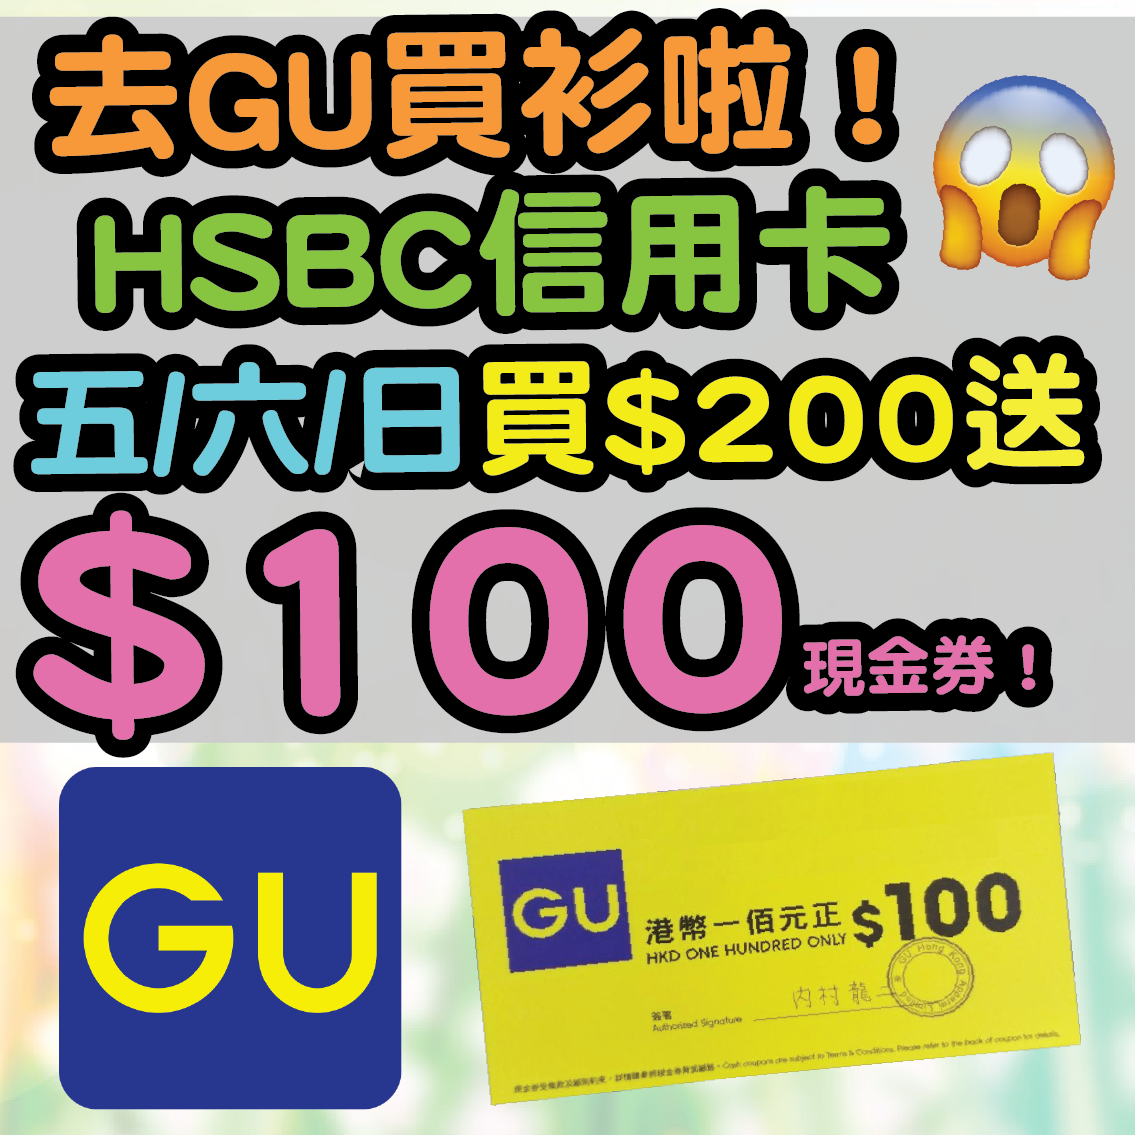 HSBC信用卡優惠！8月20日至8月22日期間，GU單一簽賬$200，就有GU $100現金券！